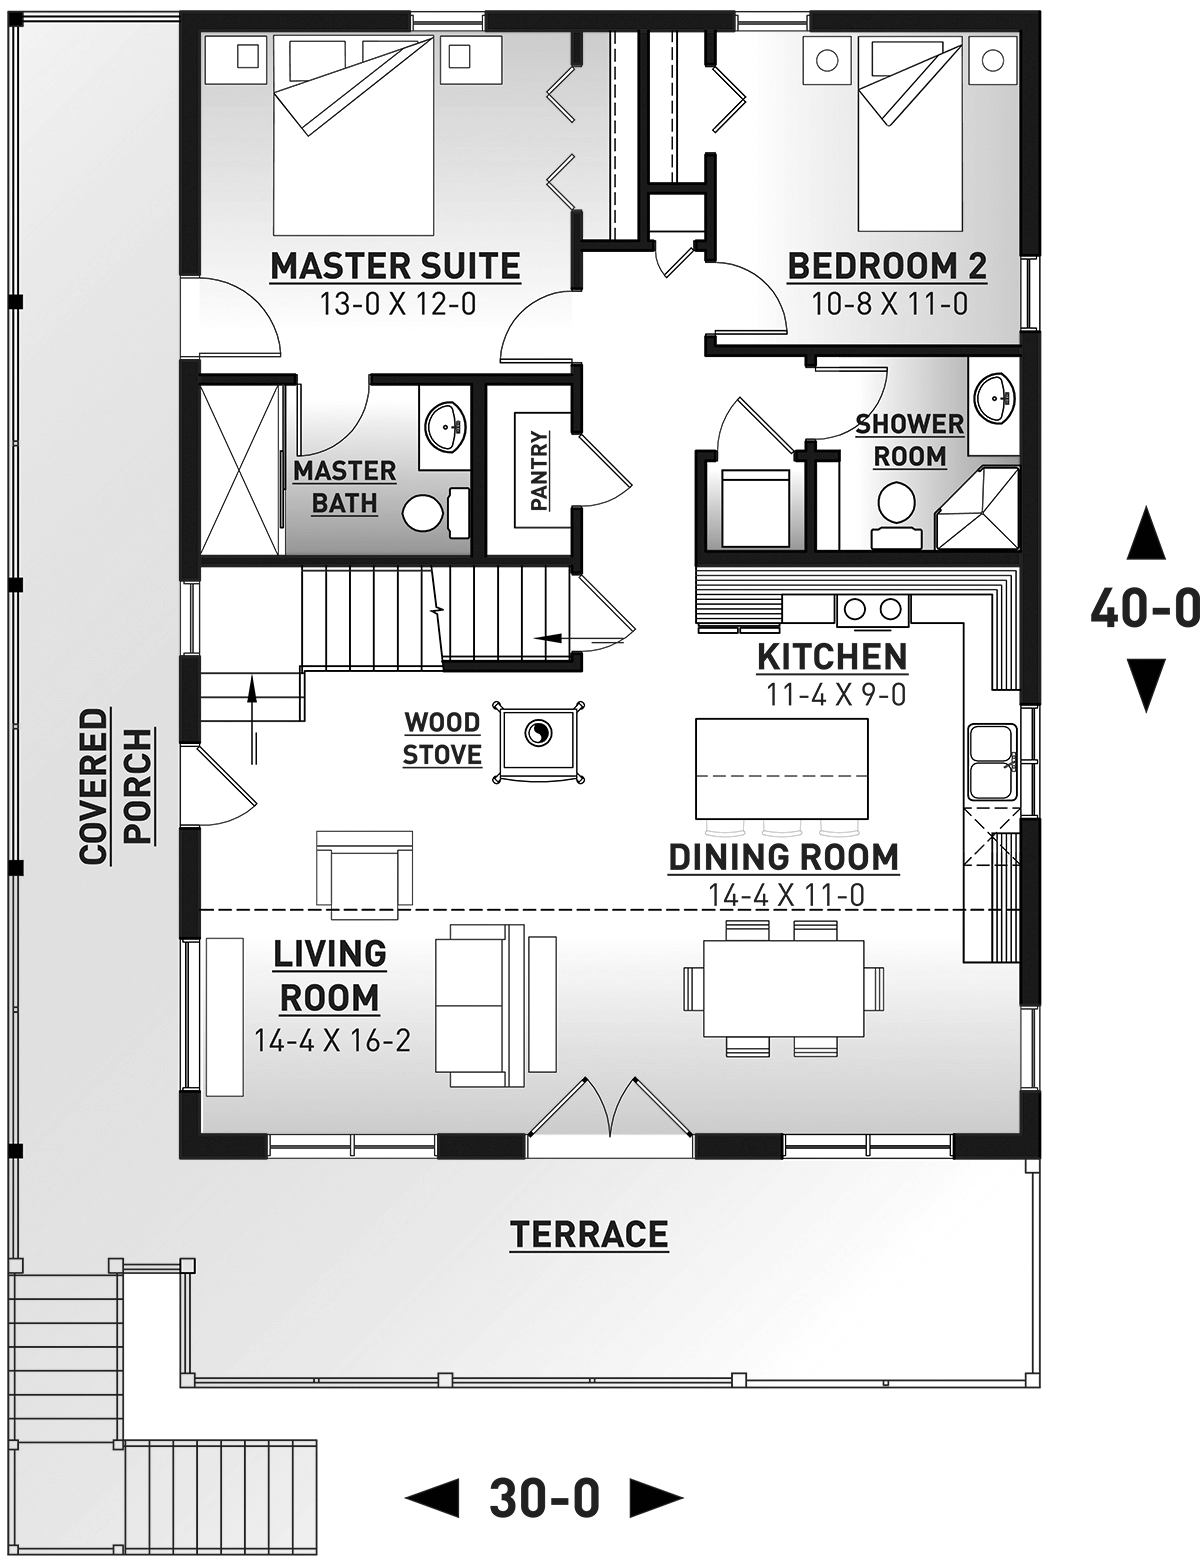 4 Bedroom 3 Bath 1 900 2 400 Sq Ft House Plans